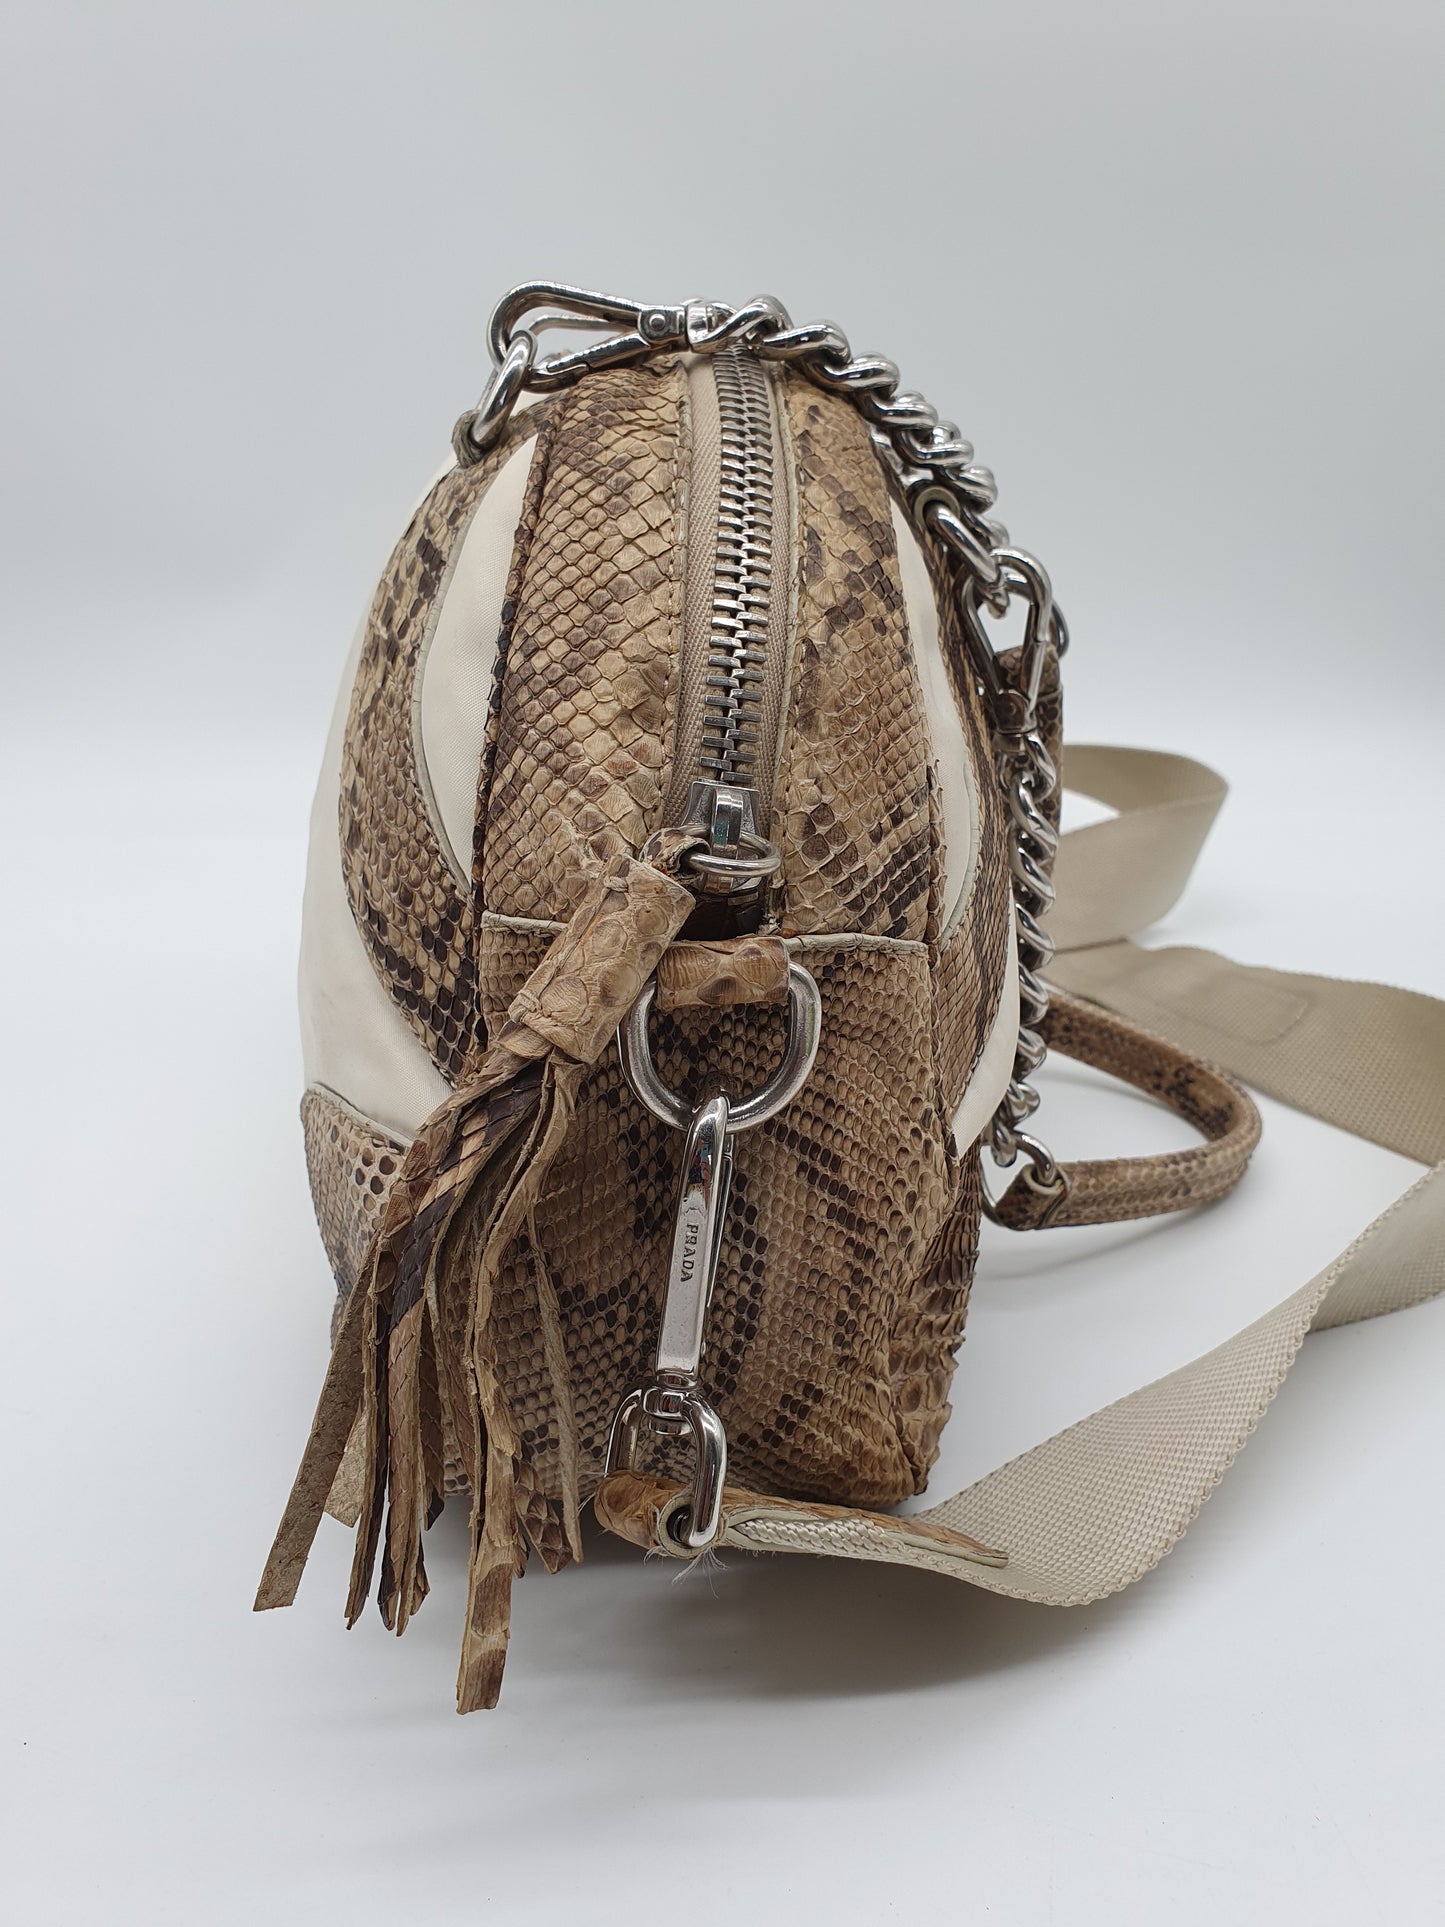 Prada python and cloth crossbodybag